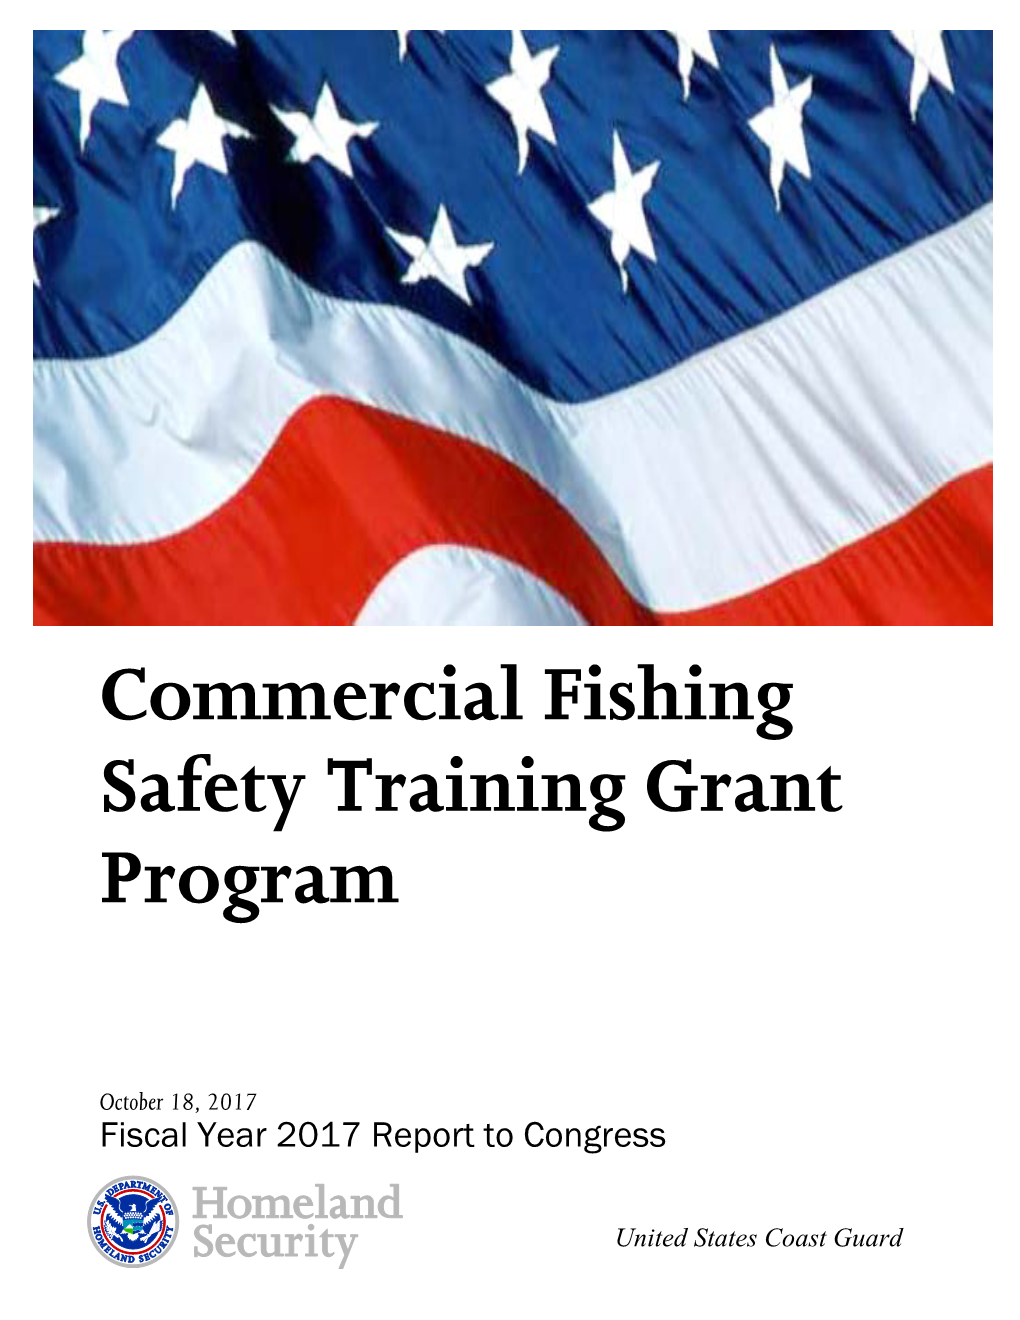 Commercial Fishing Safety Training Grant Program